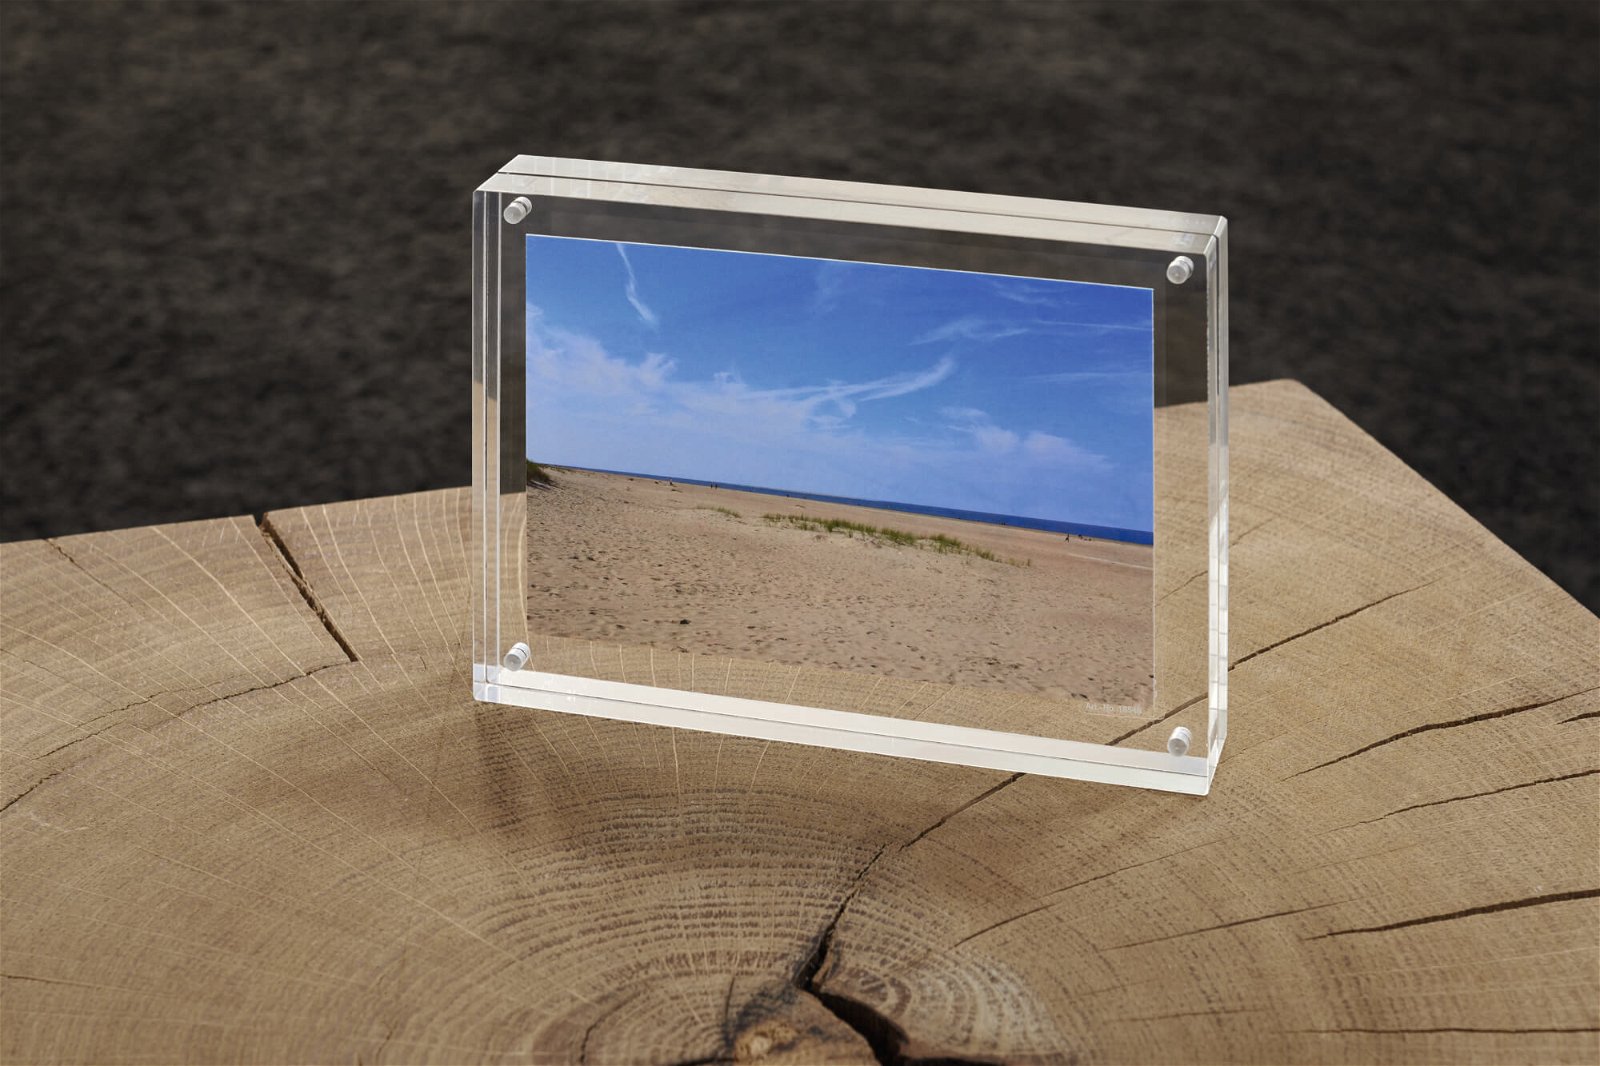 Acryl-Bilderhalter, 17,8 x 12,7 x 3 cm, glasklar